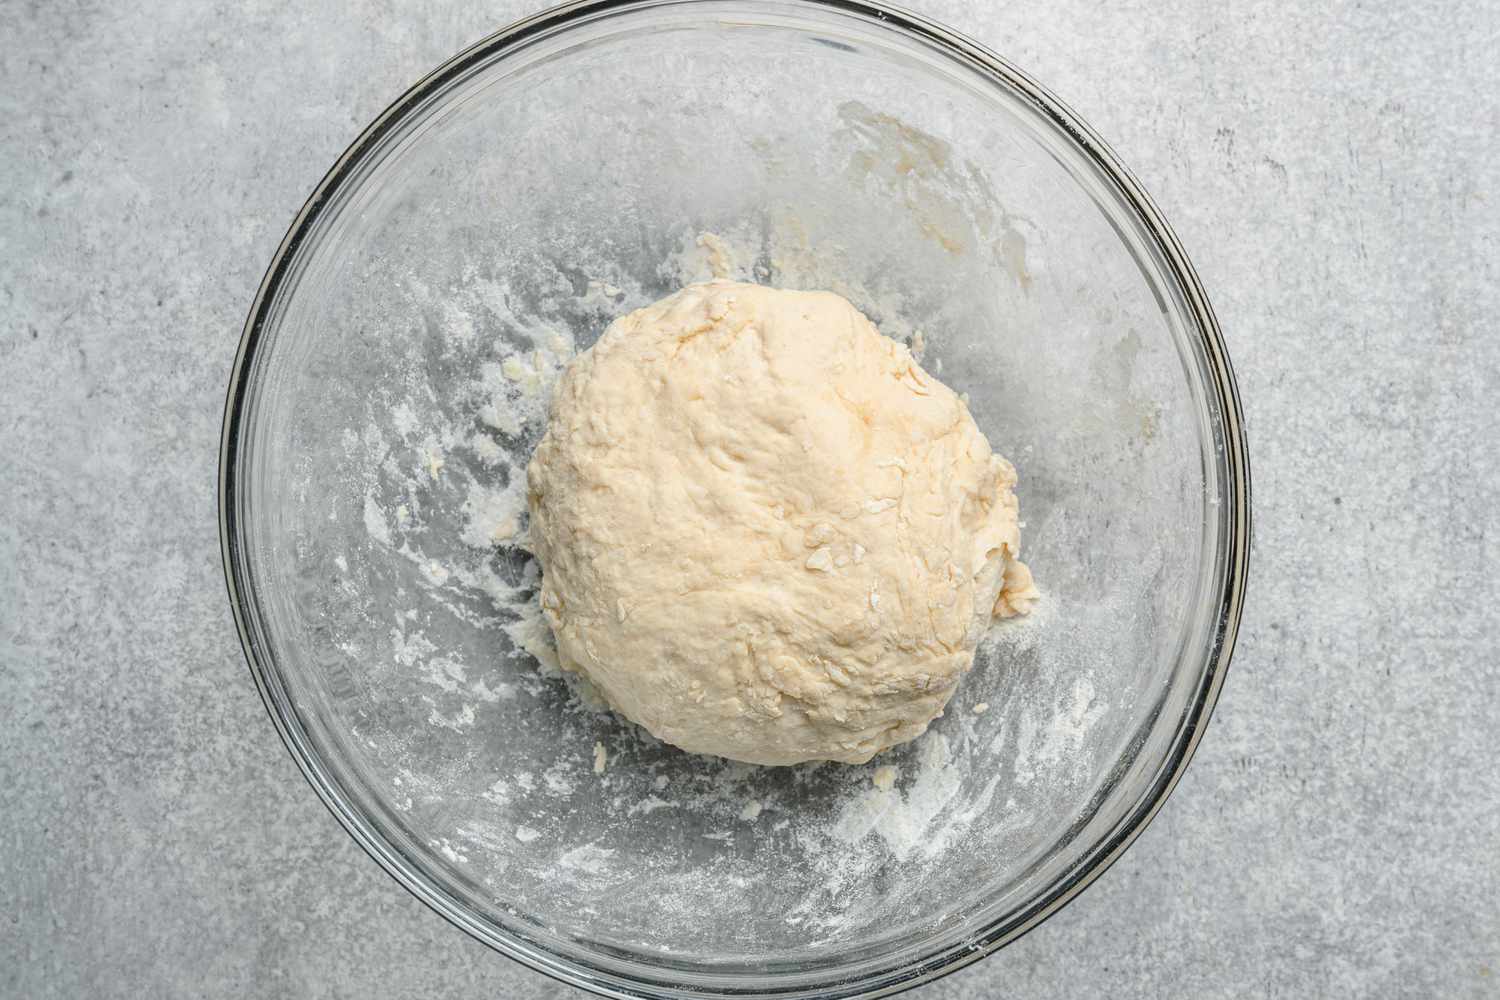 A bowl with a ball soft dough